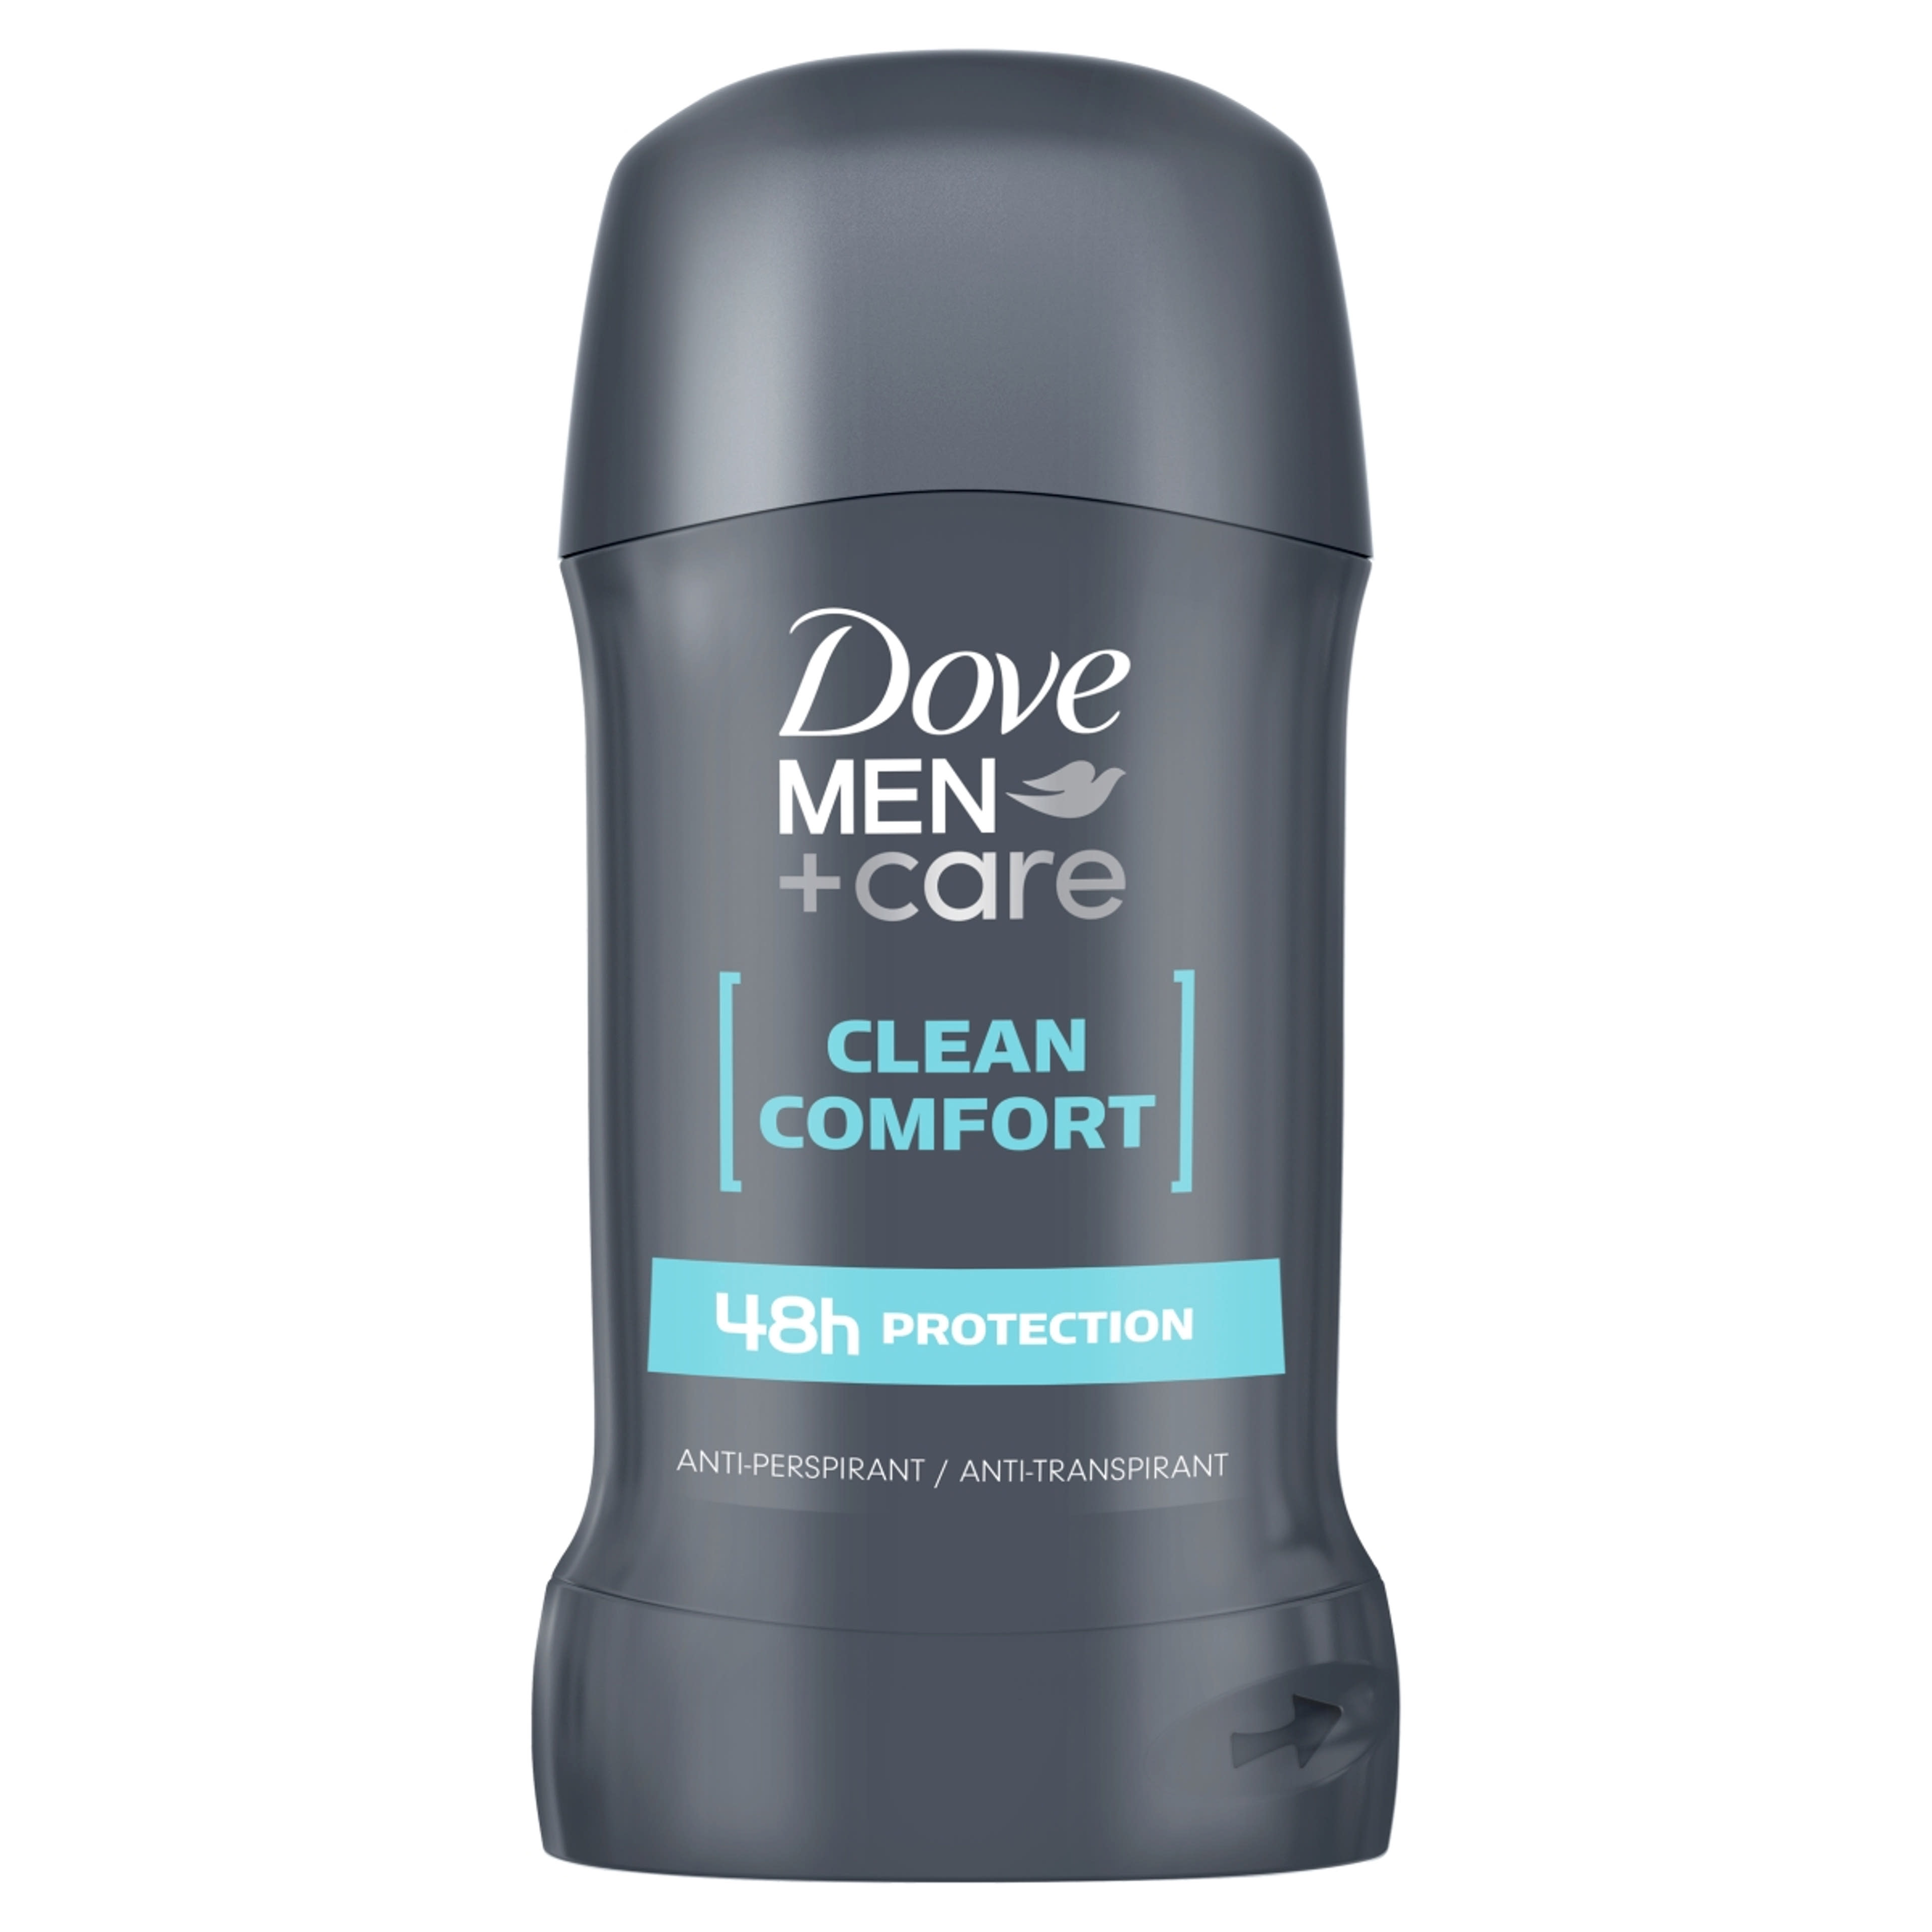 Dove Men+Care Clean Comfort stift - 50 ml-1